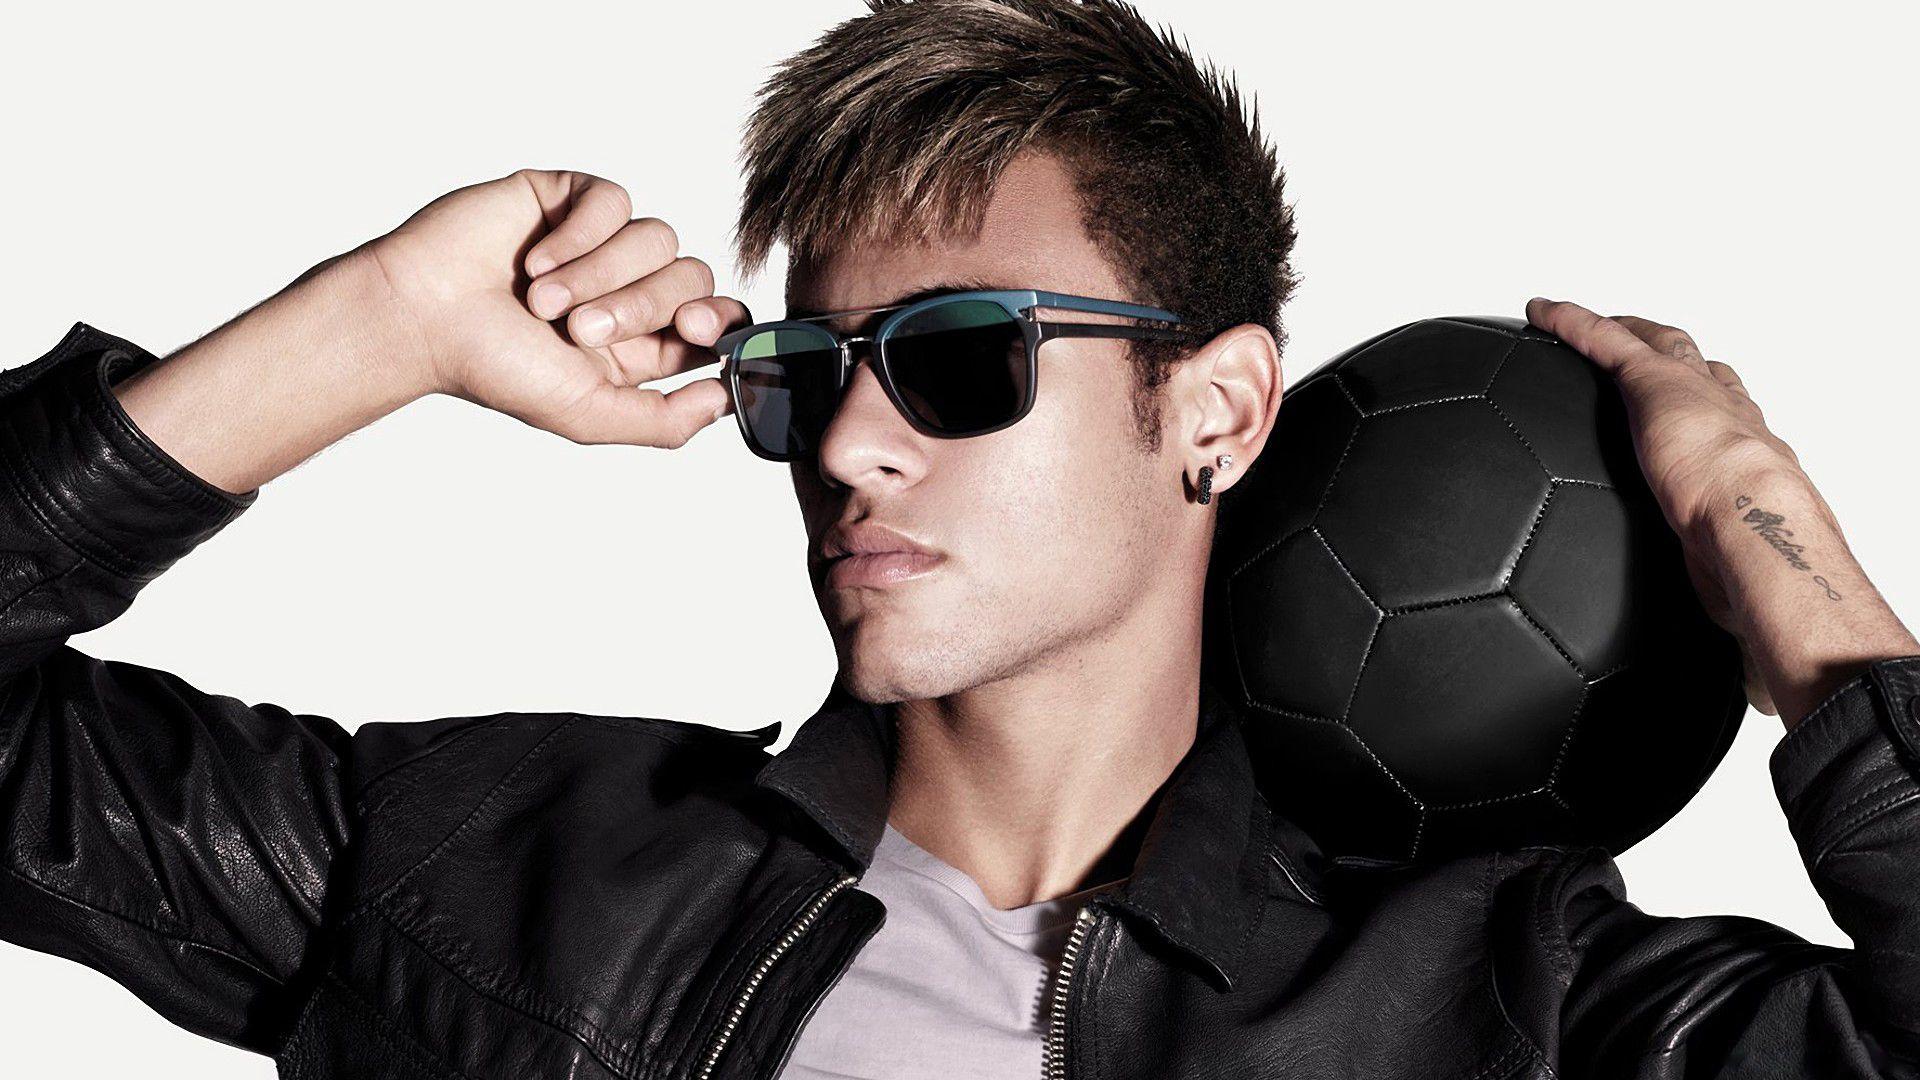 Wallpaper Neymar Jr Police Sunglasses